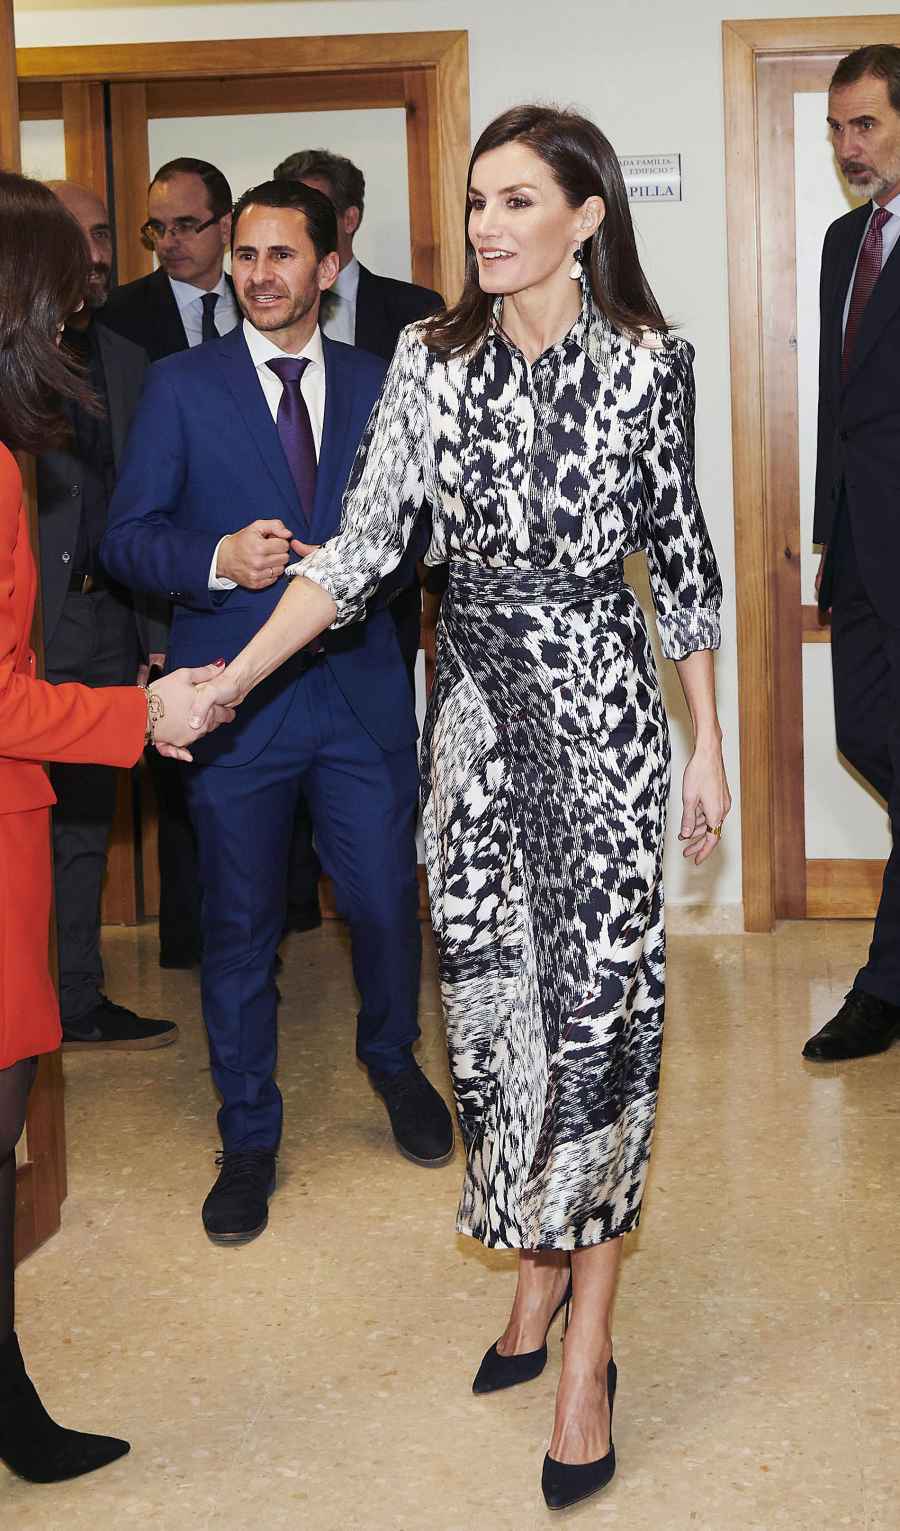 Queen Letizia Animal Print Dress February 6, 2020